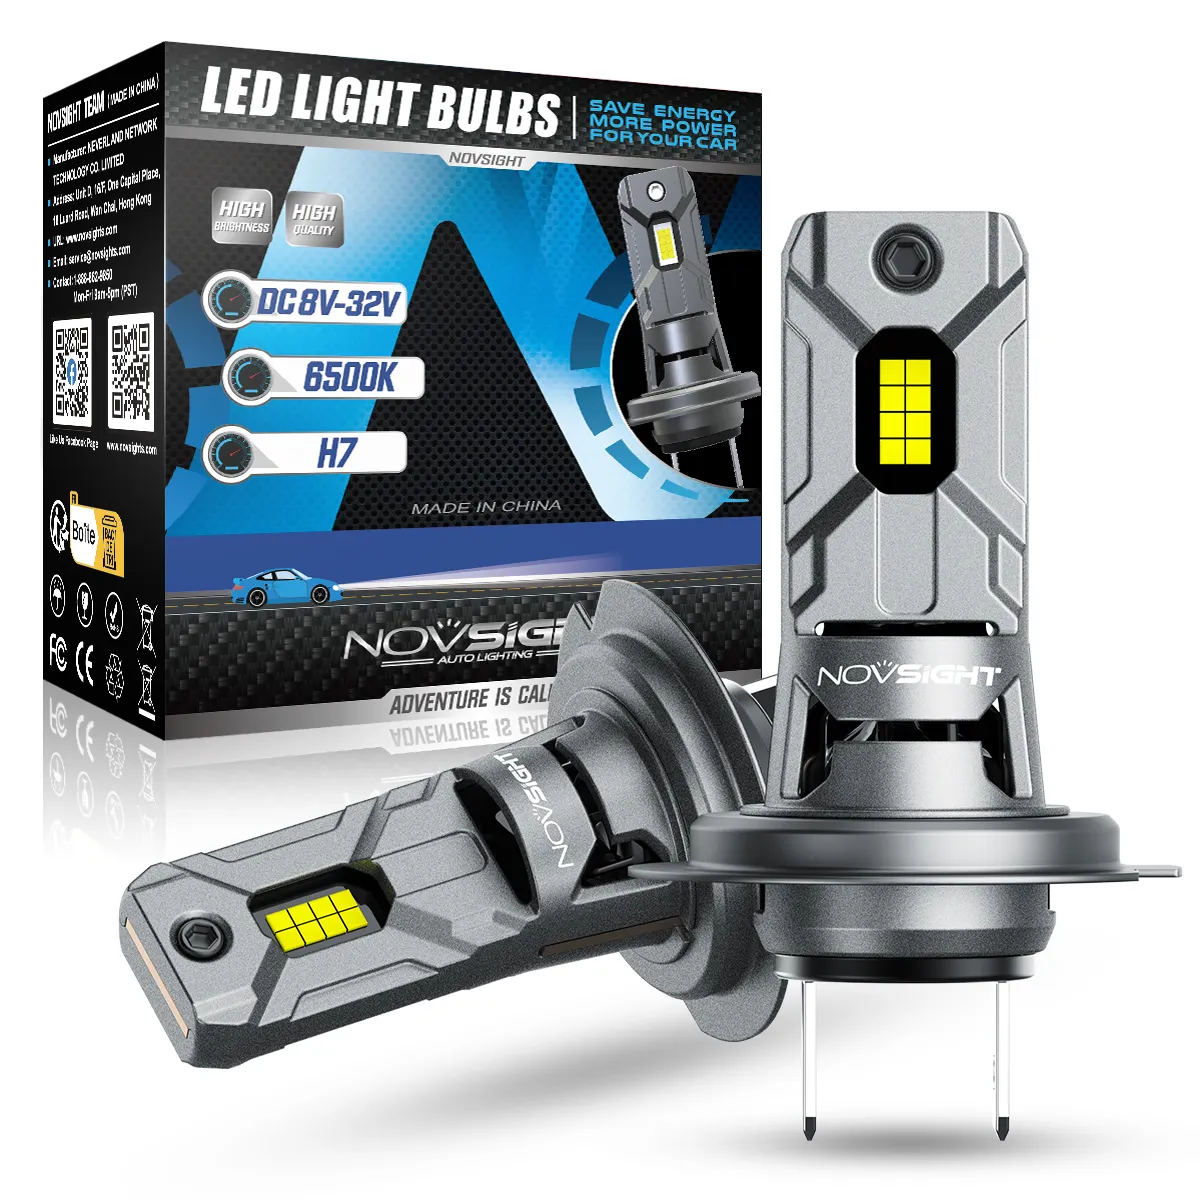 Novsight N64 mini size plug and play 1:1 car H7 Led headlight light bulb h18 12000lumen 60W h7 led headlight